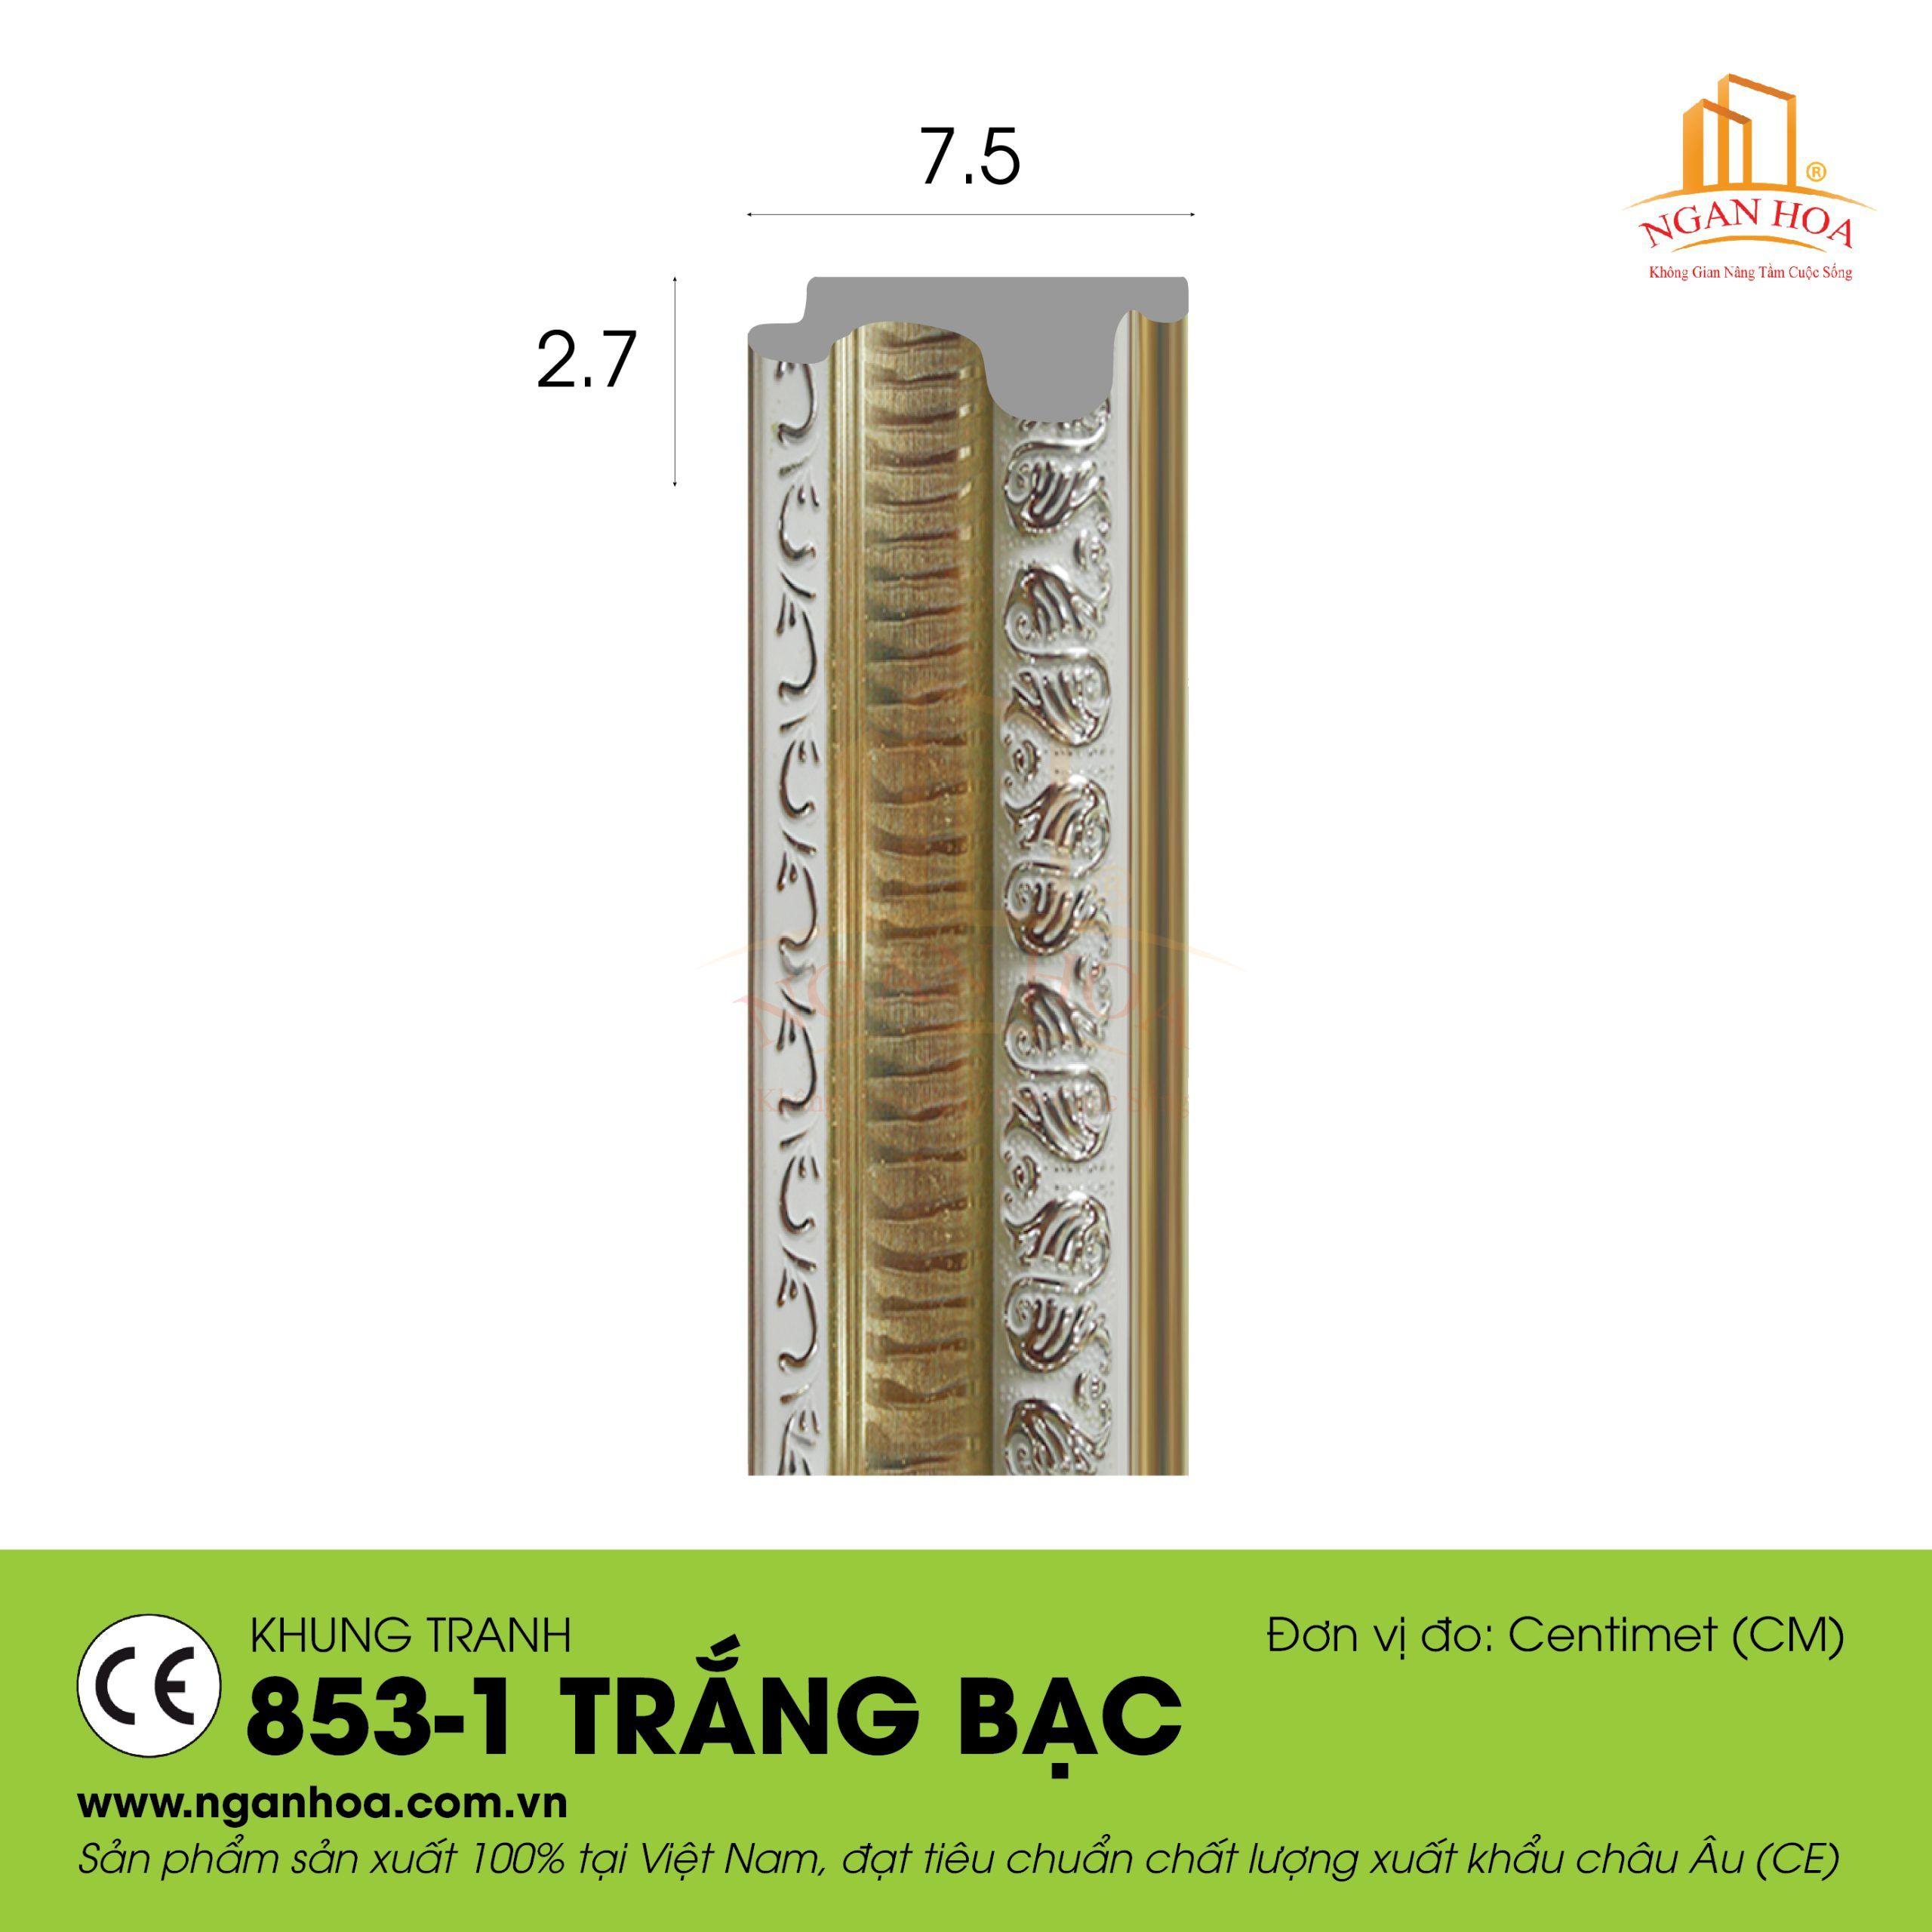 KT 853 1 Trang bac scaled